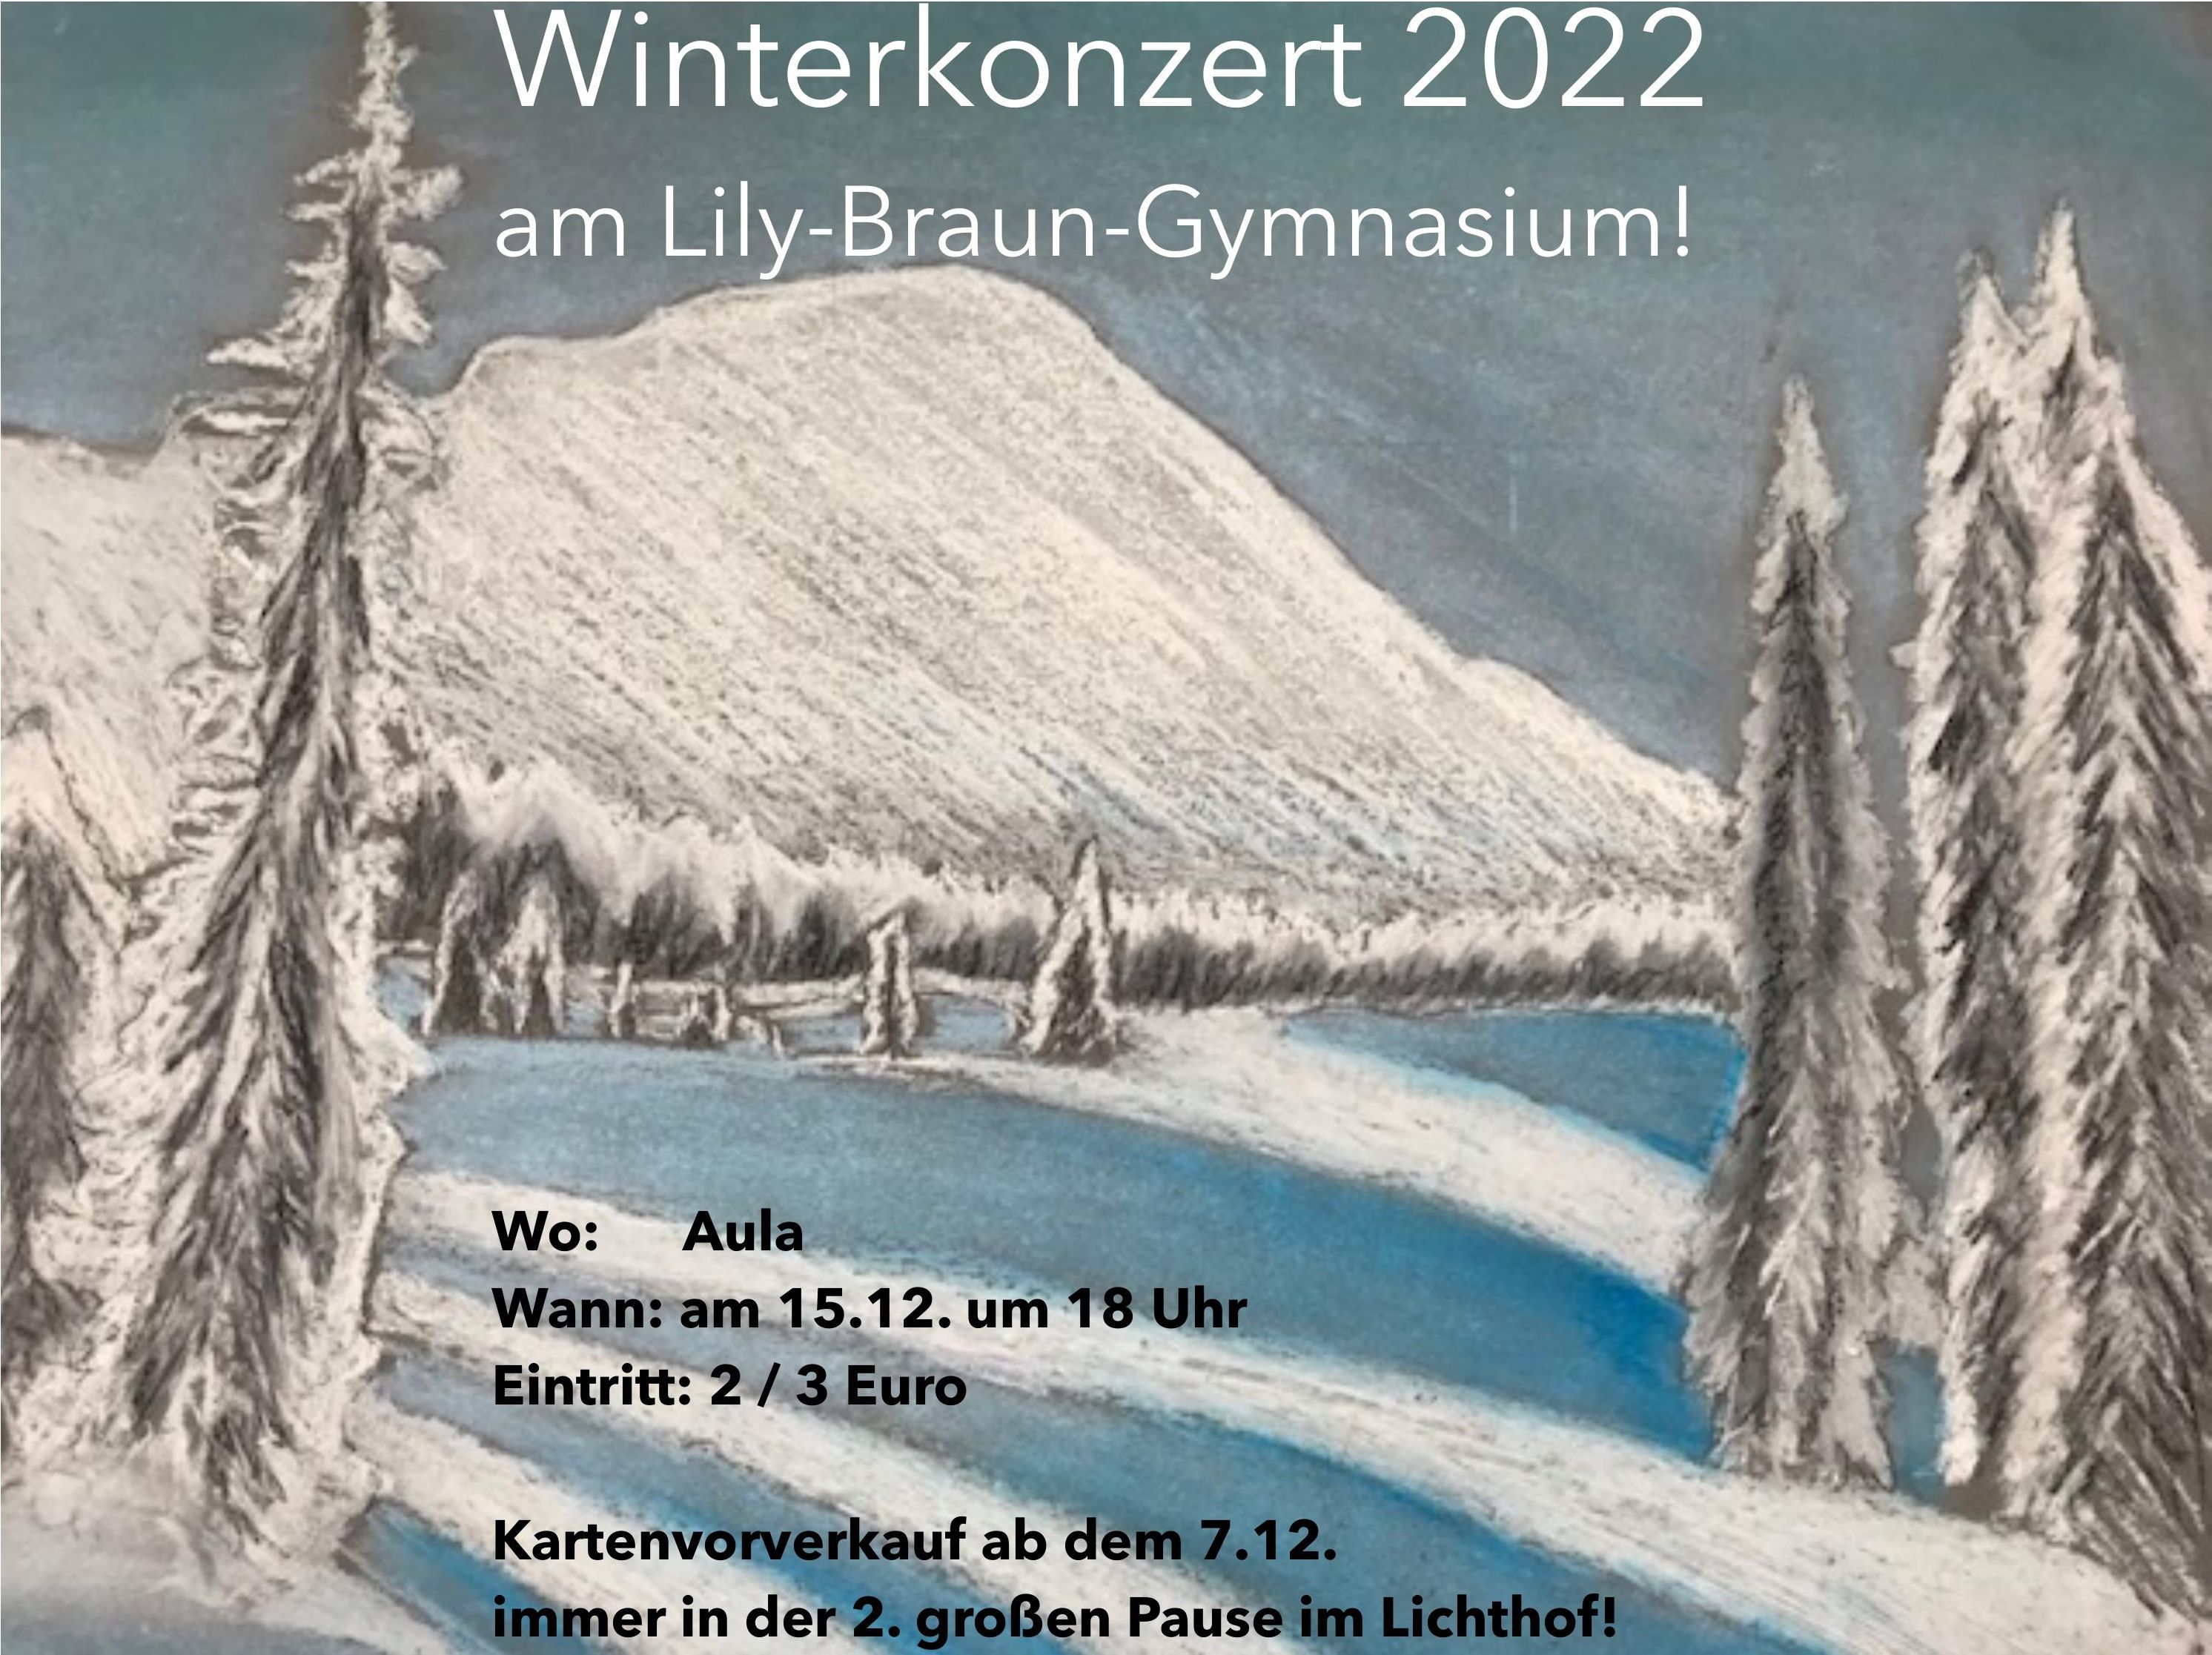 20221128 Winterkonzert Ankuendigung 1 1